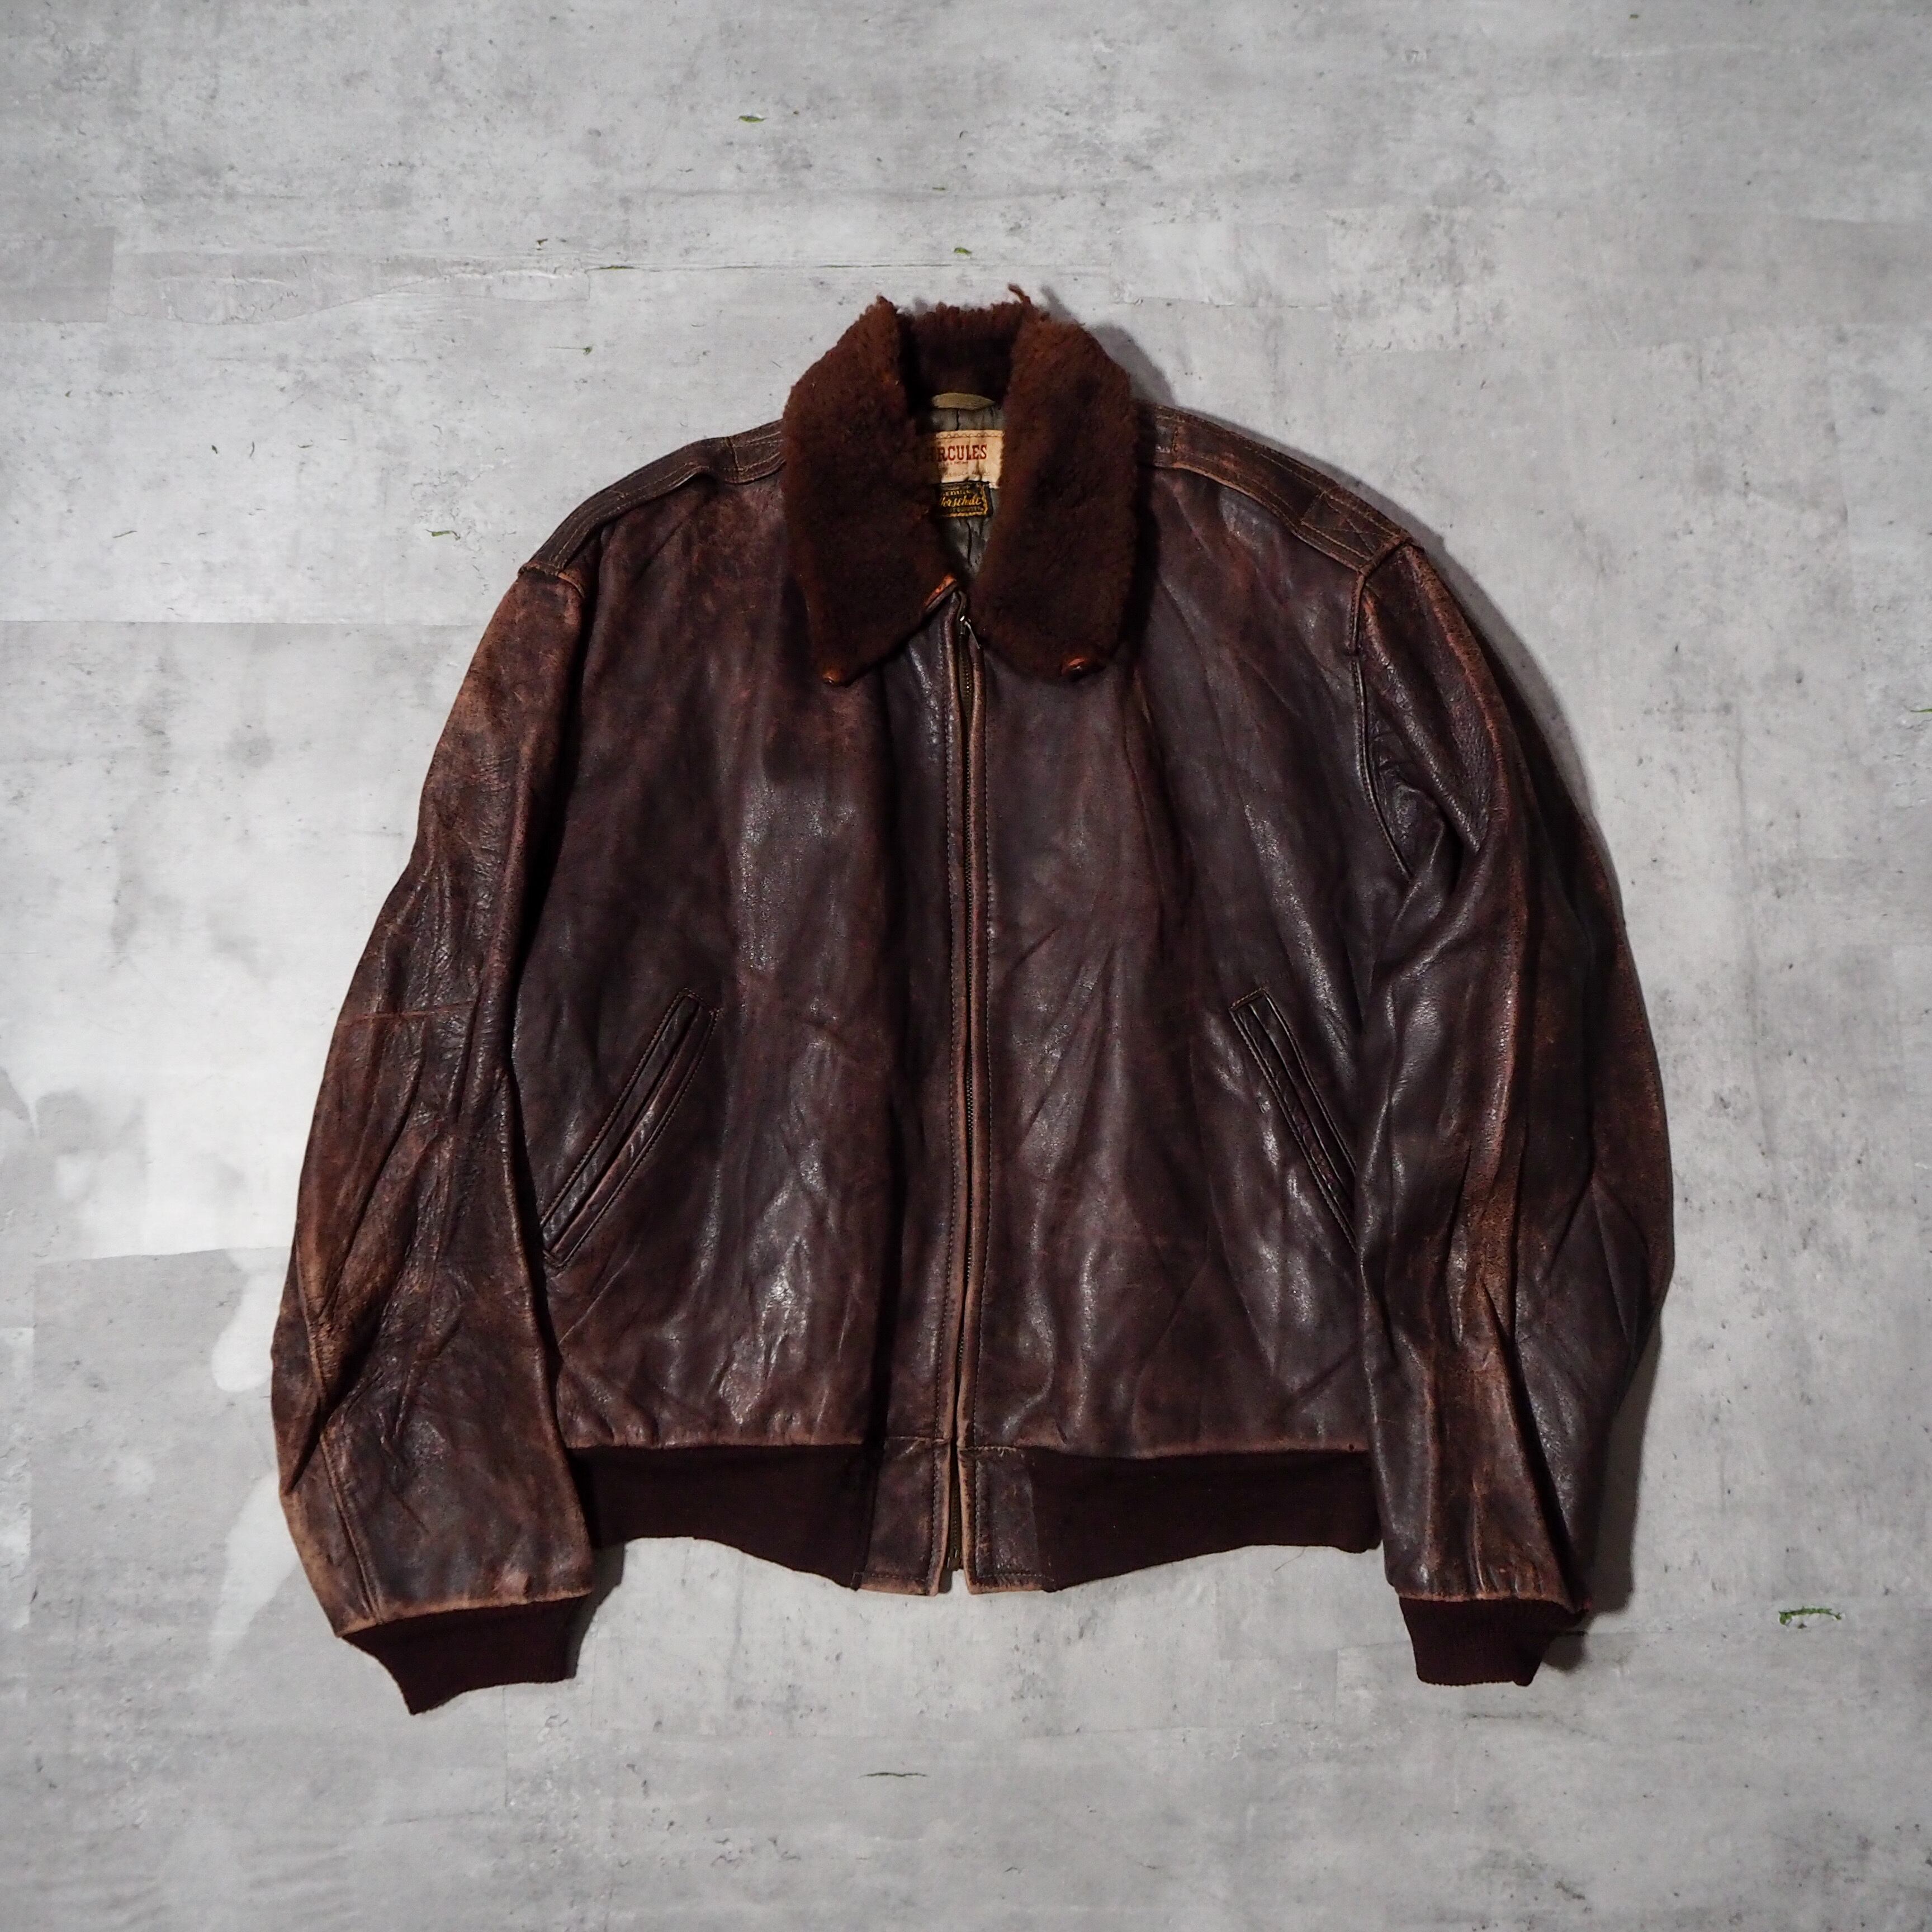 60s “HERCULES” G-1 type leather jacket 60年代 ヘラクレス レザージャケット ヴィンテージ vintage